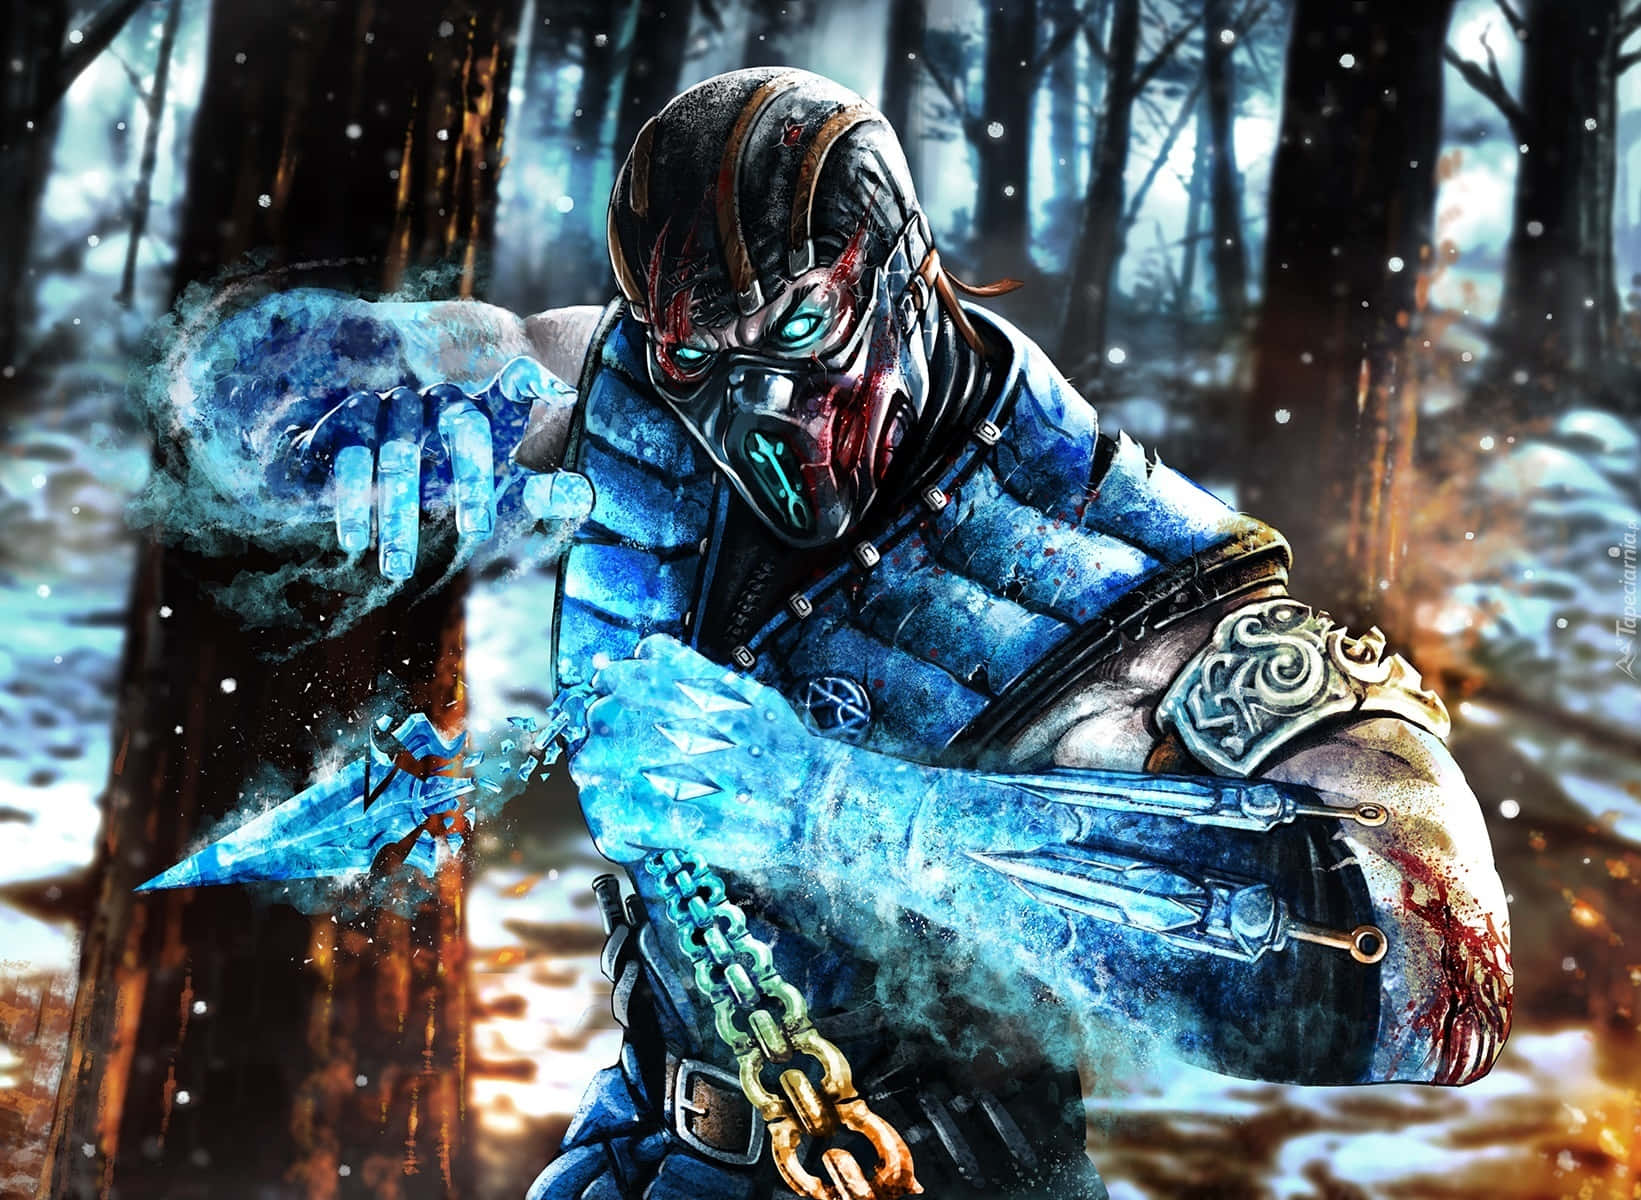 Mortal Kombat - Sub-Zero dominating the battlefield Wallpaper